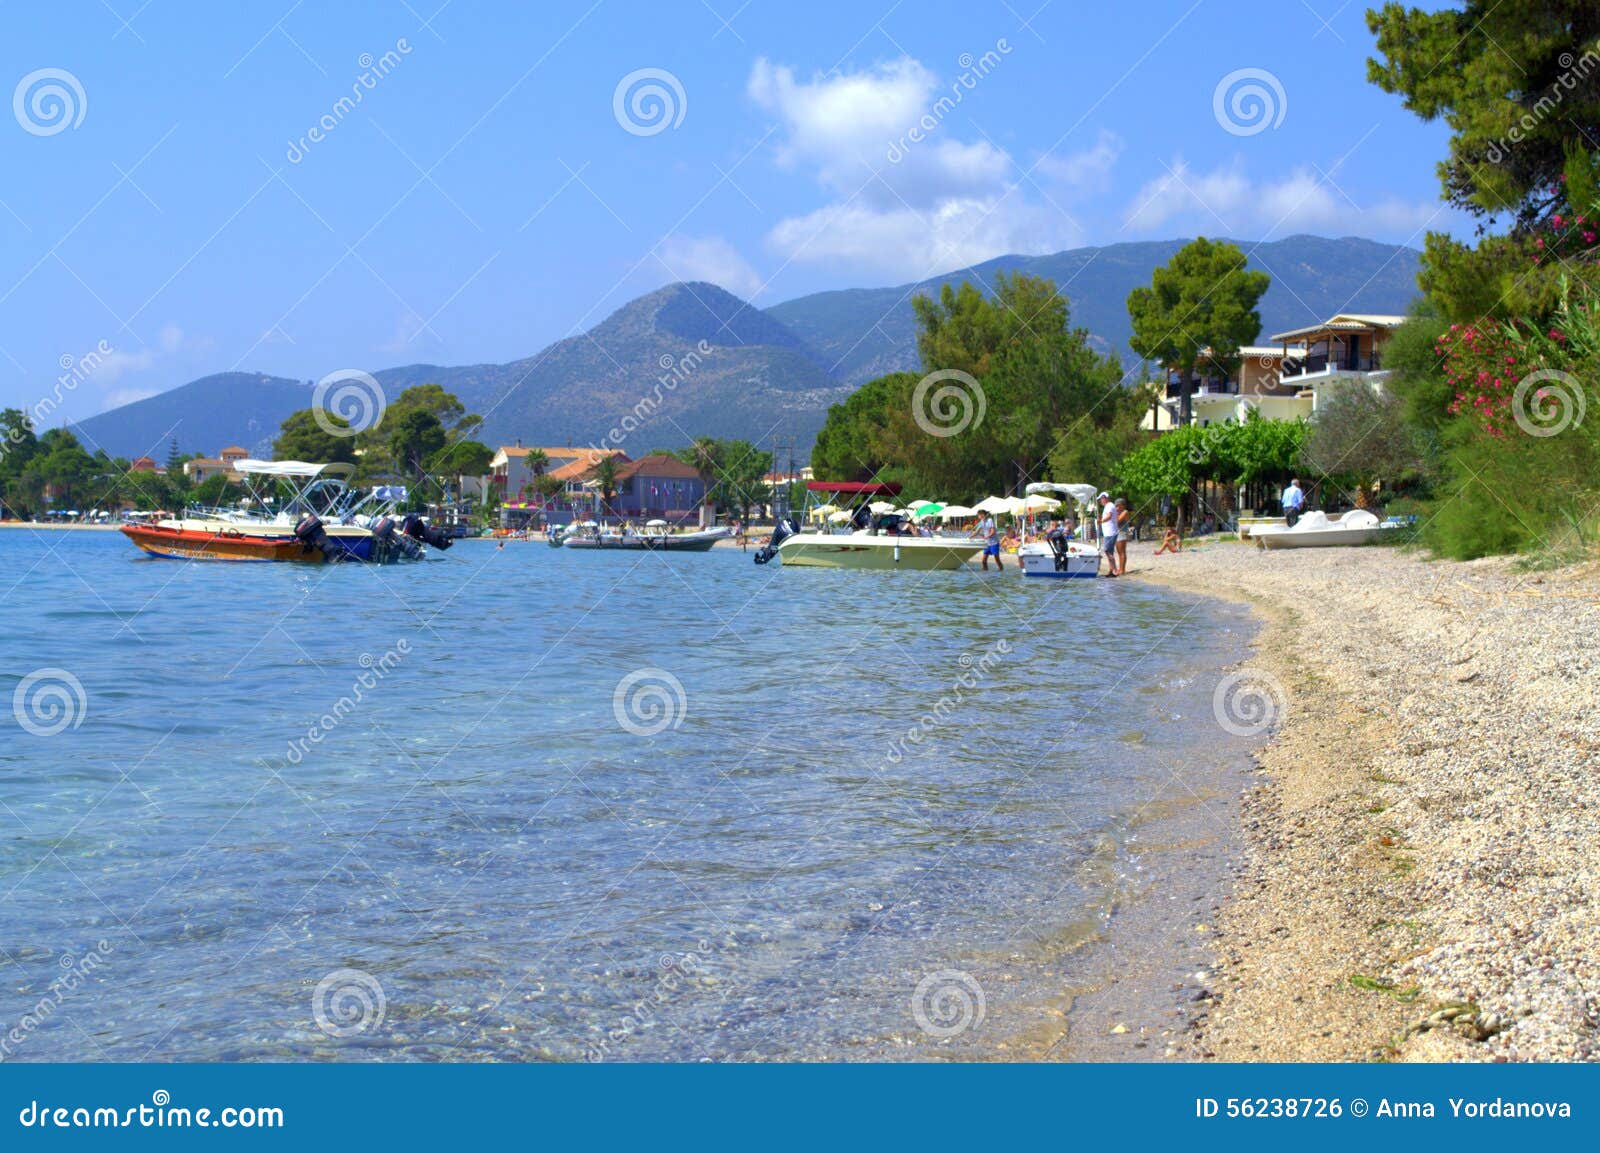 Nydri Beach,Lefkada Island Greece Editorial Photo - Image of boat ...